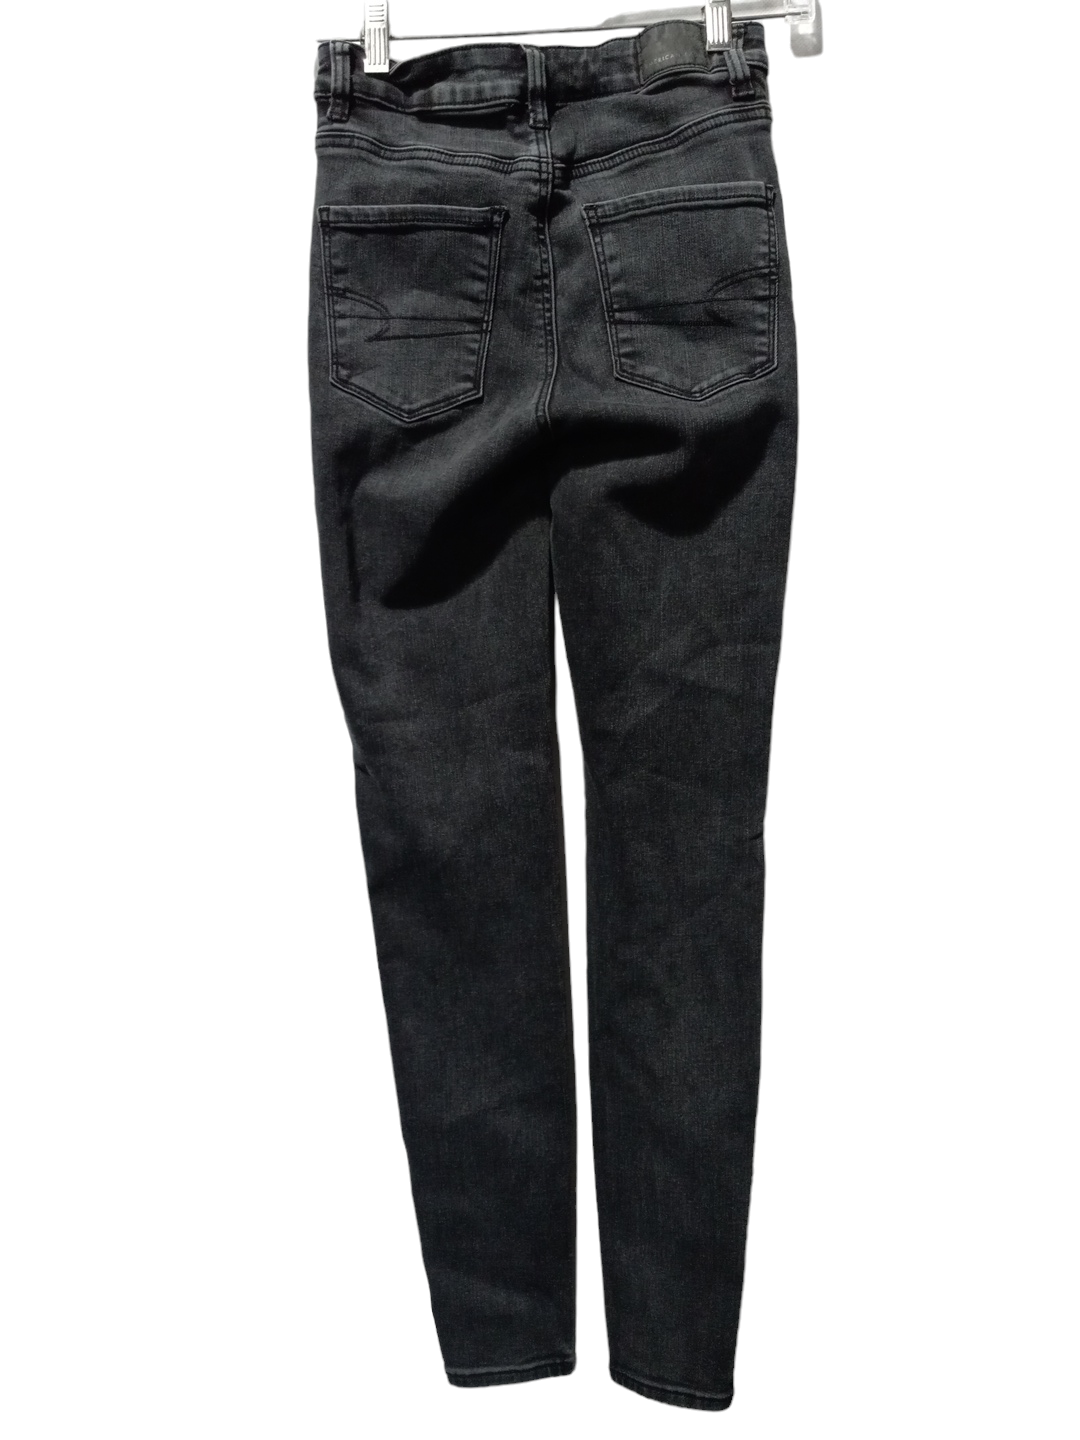 Black Denim Jeans Skinny American Eagle, Size 0